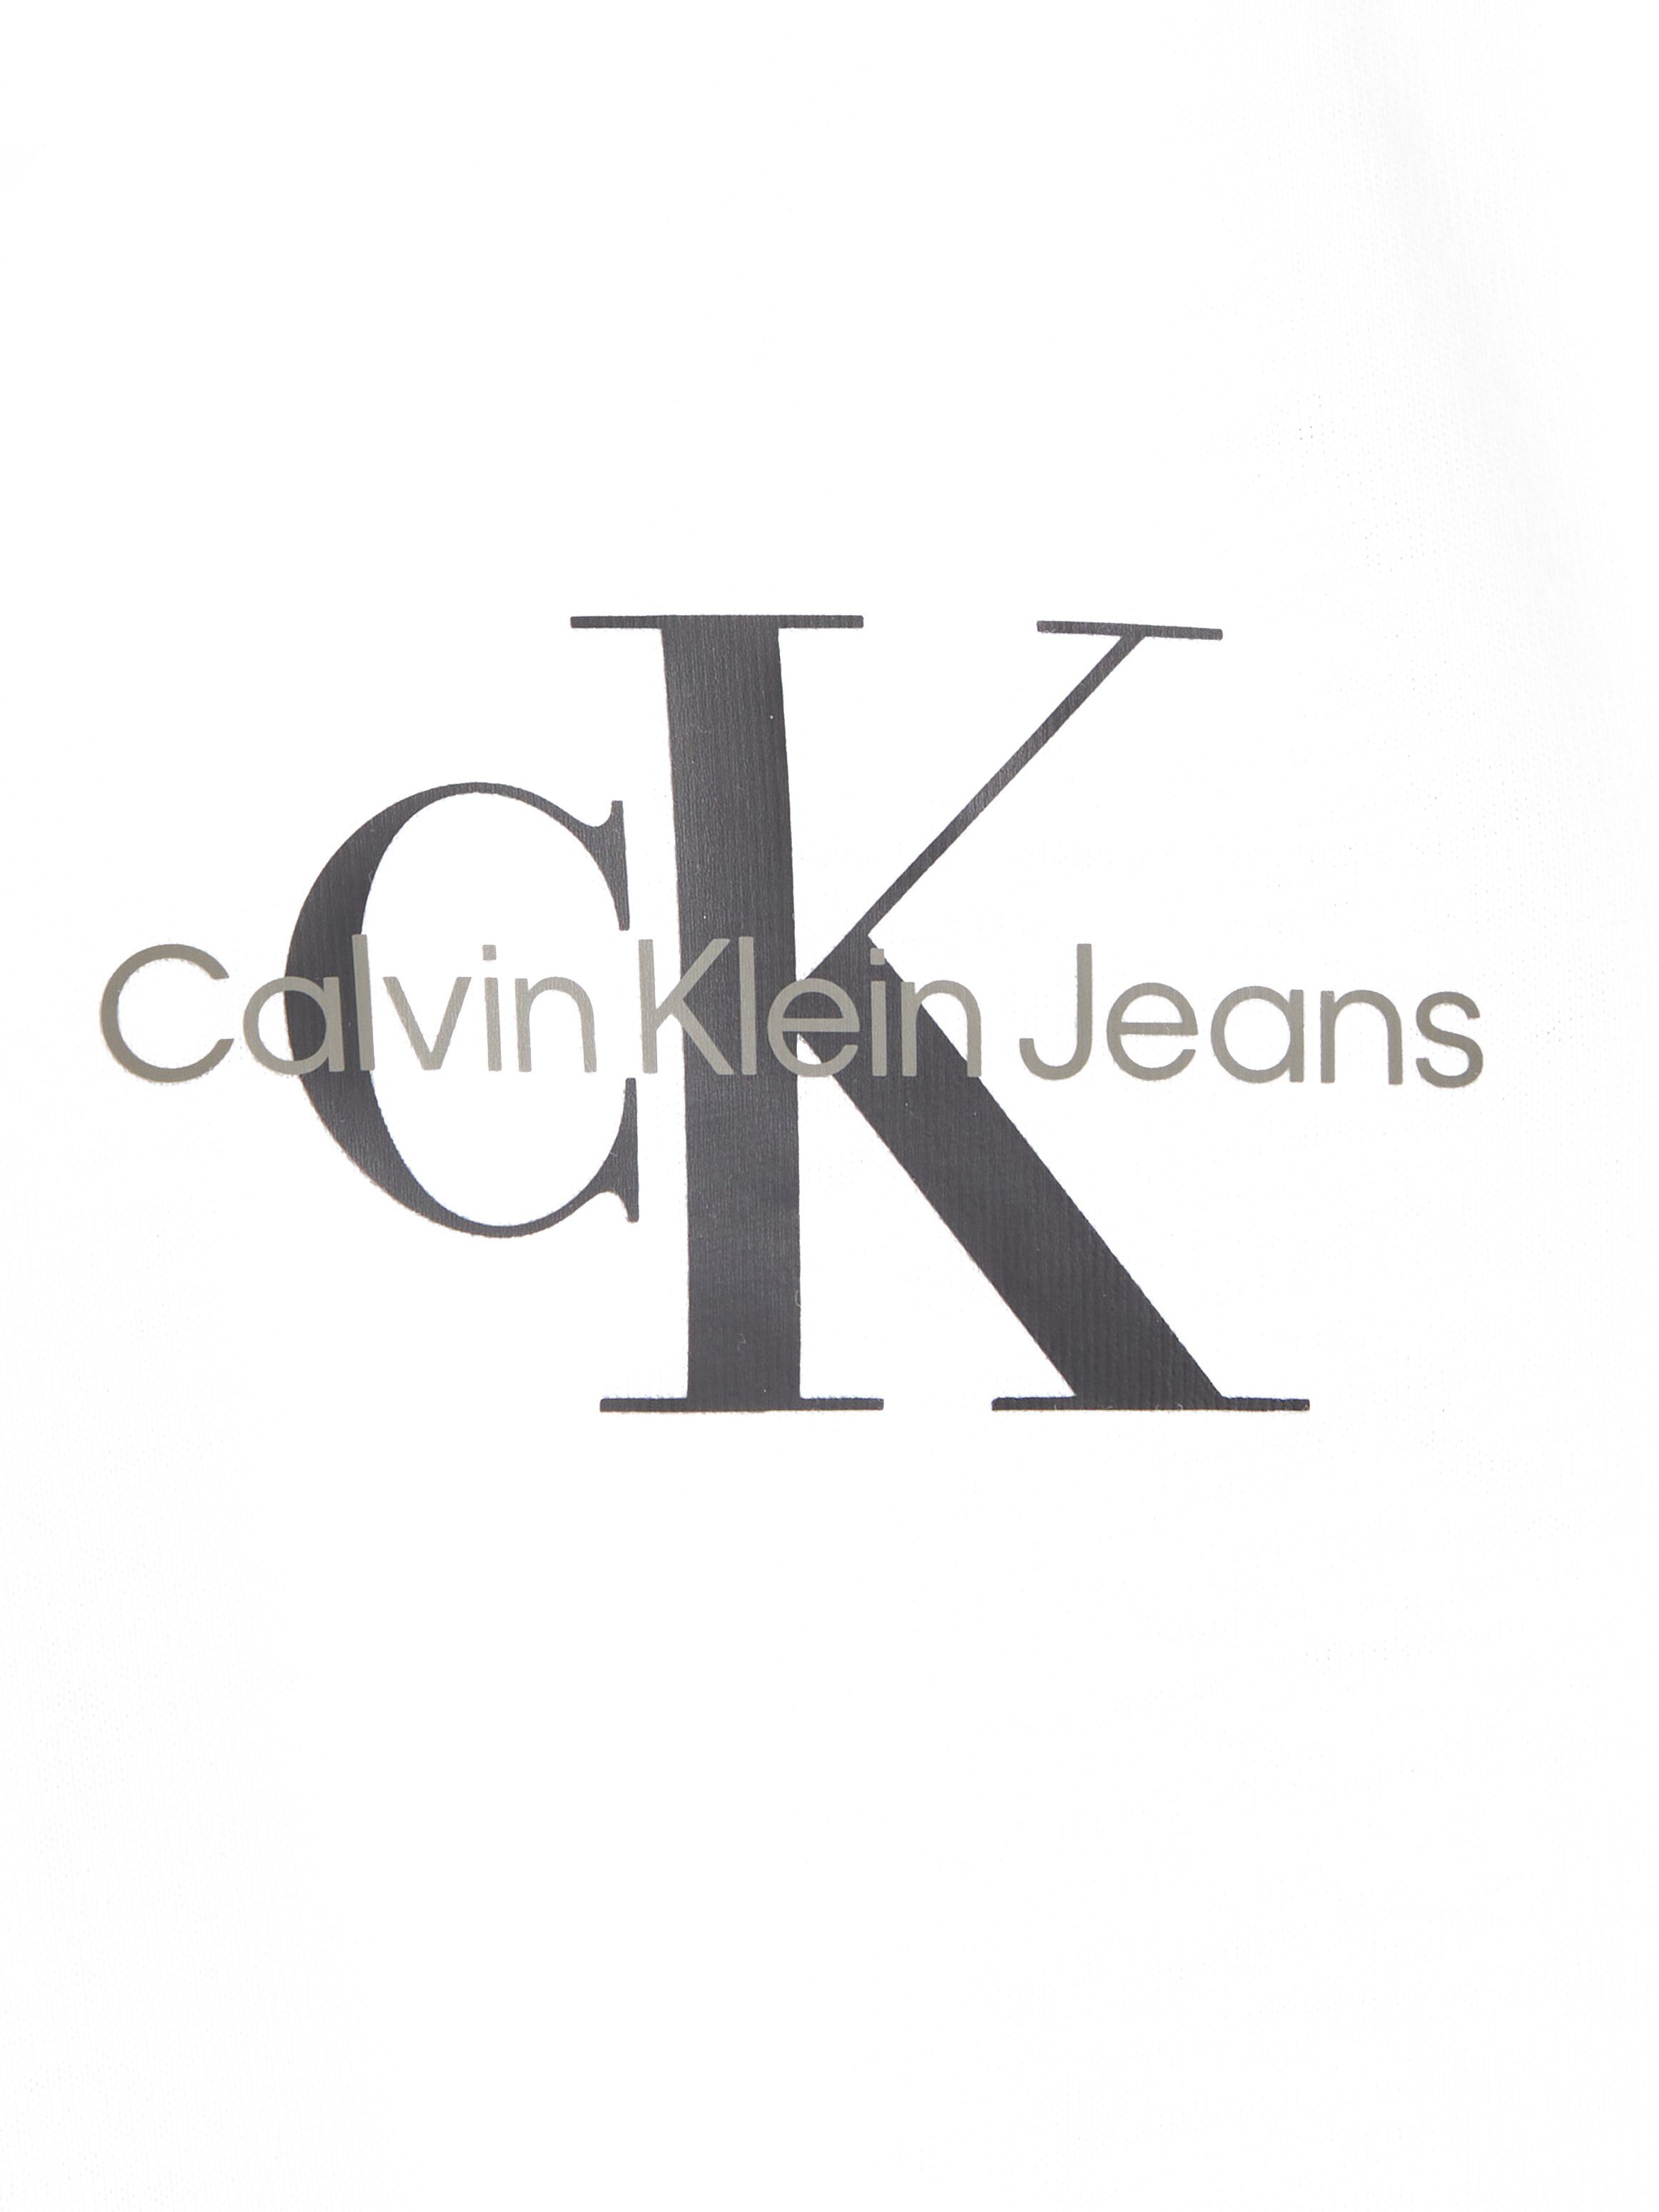 Calvin Klein TOP White MONOGRAM Jeans Bright CHEST T-Shirt